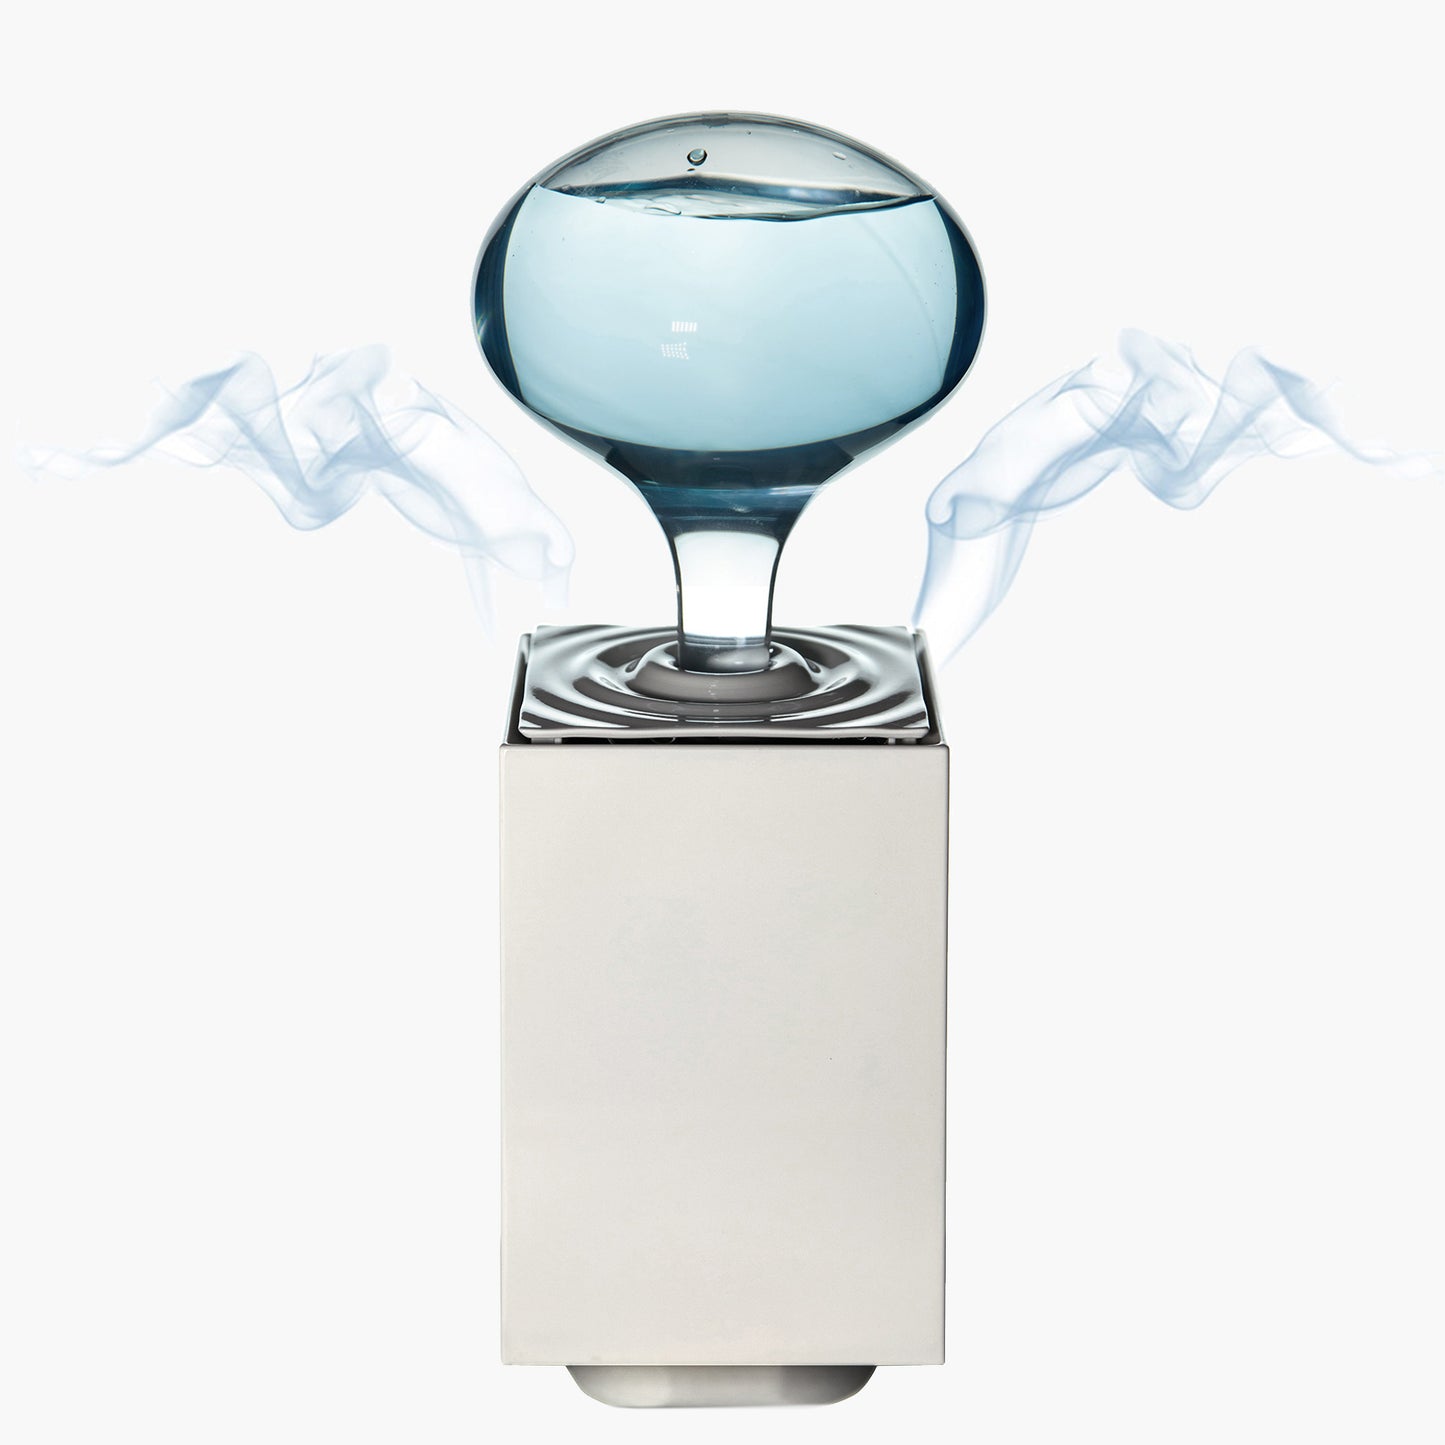 LeGrow Humidifier | Increase air humidity for plants | Automatic shutdown